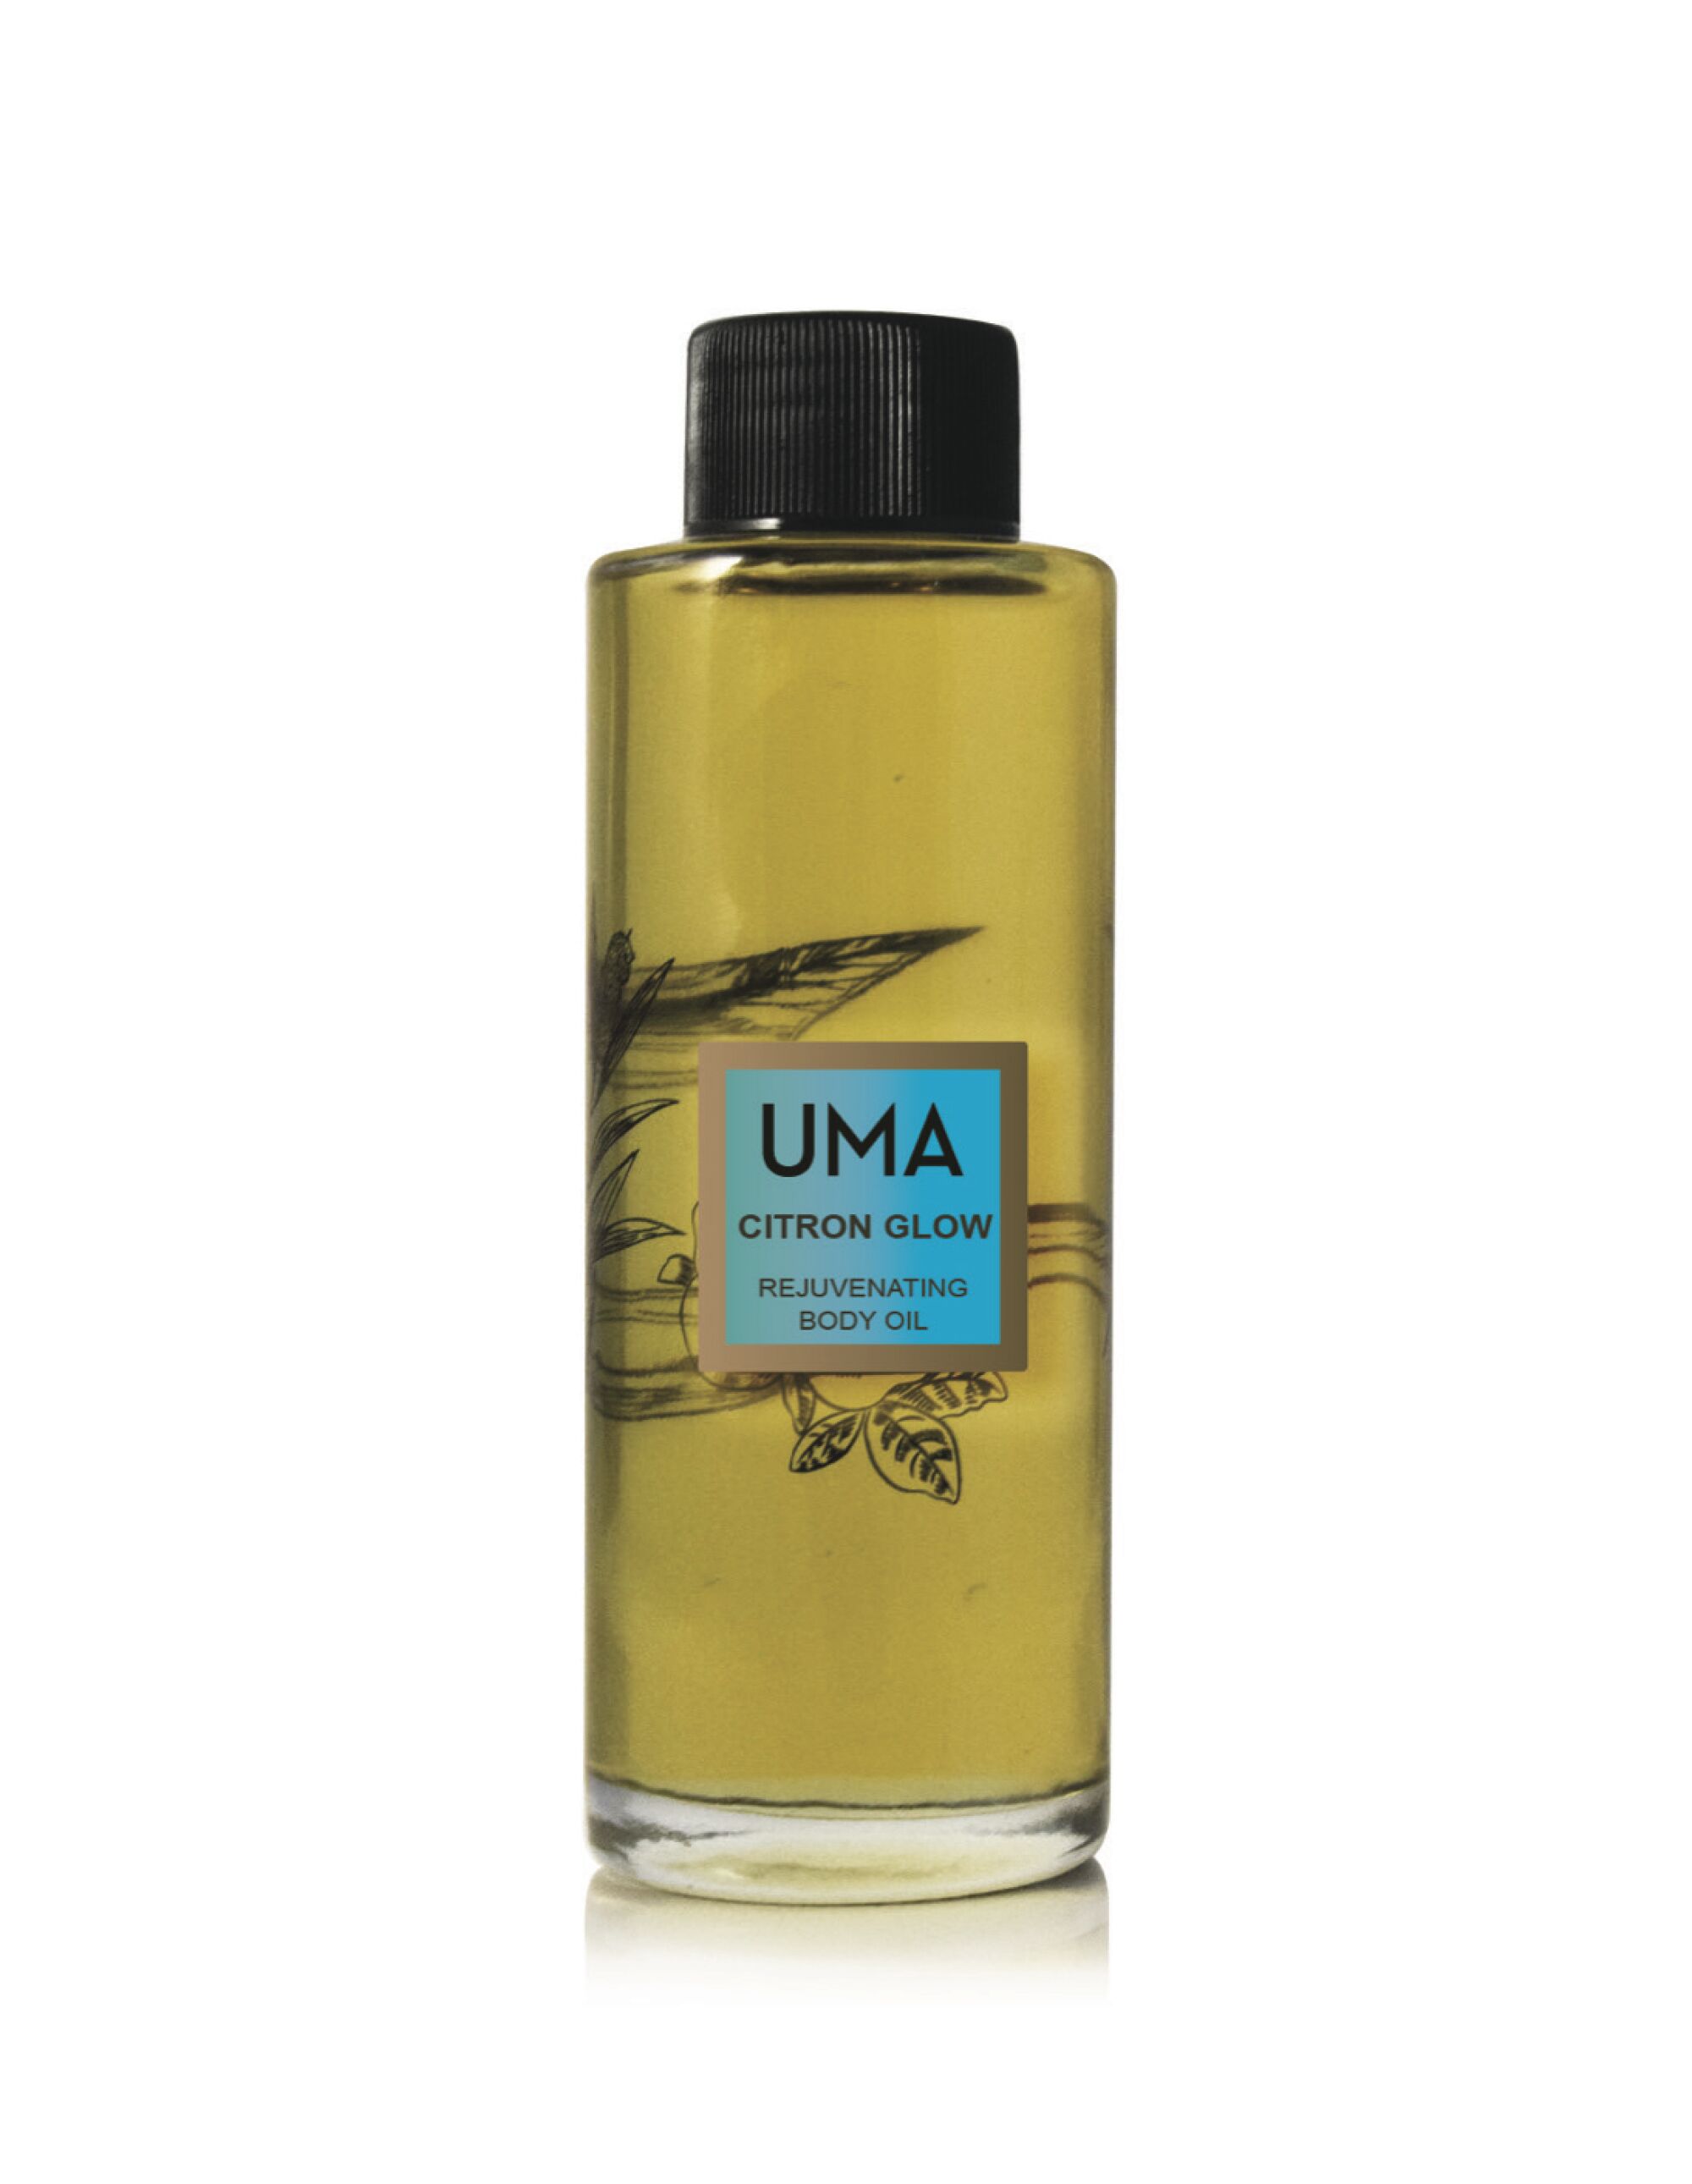 UMA Lemon Glow body oil bottle